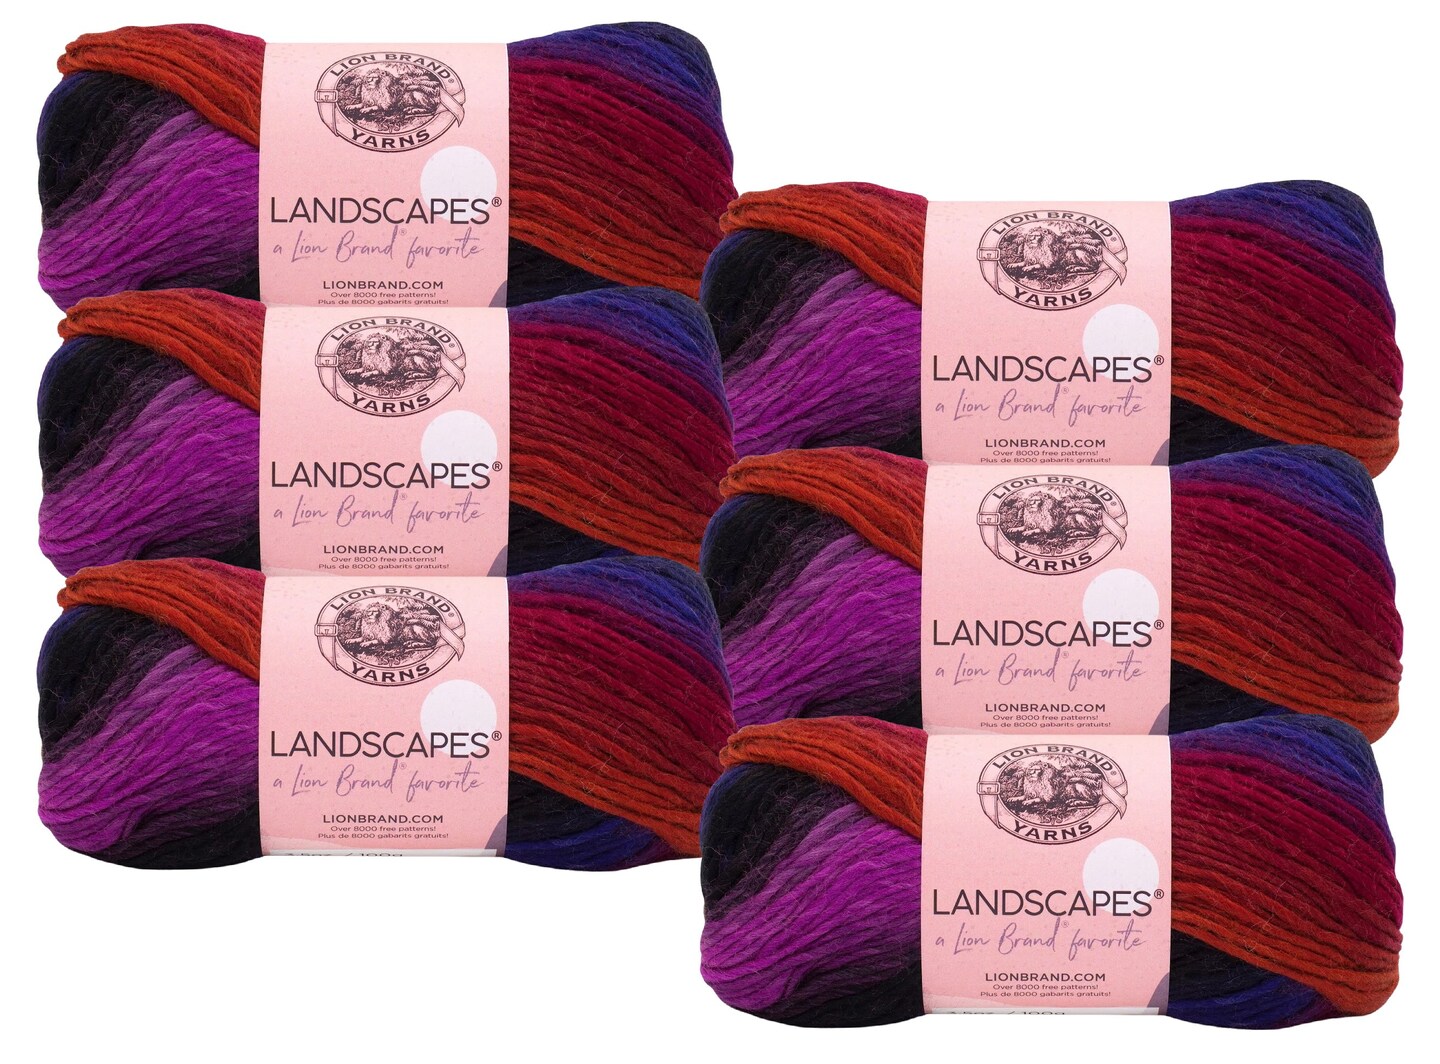 Lion Brand Yarn - Landscapes - 6 Pack Matching Dye Lot (Volcano)